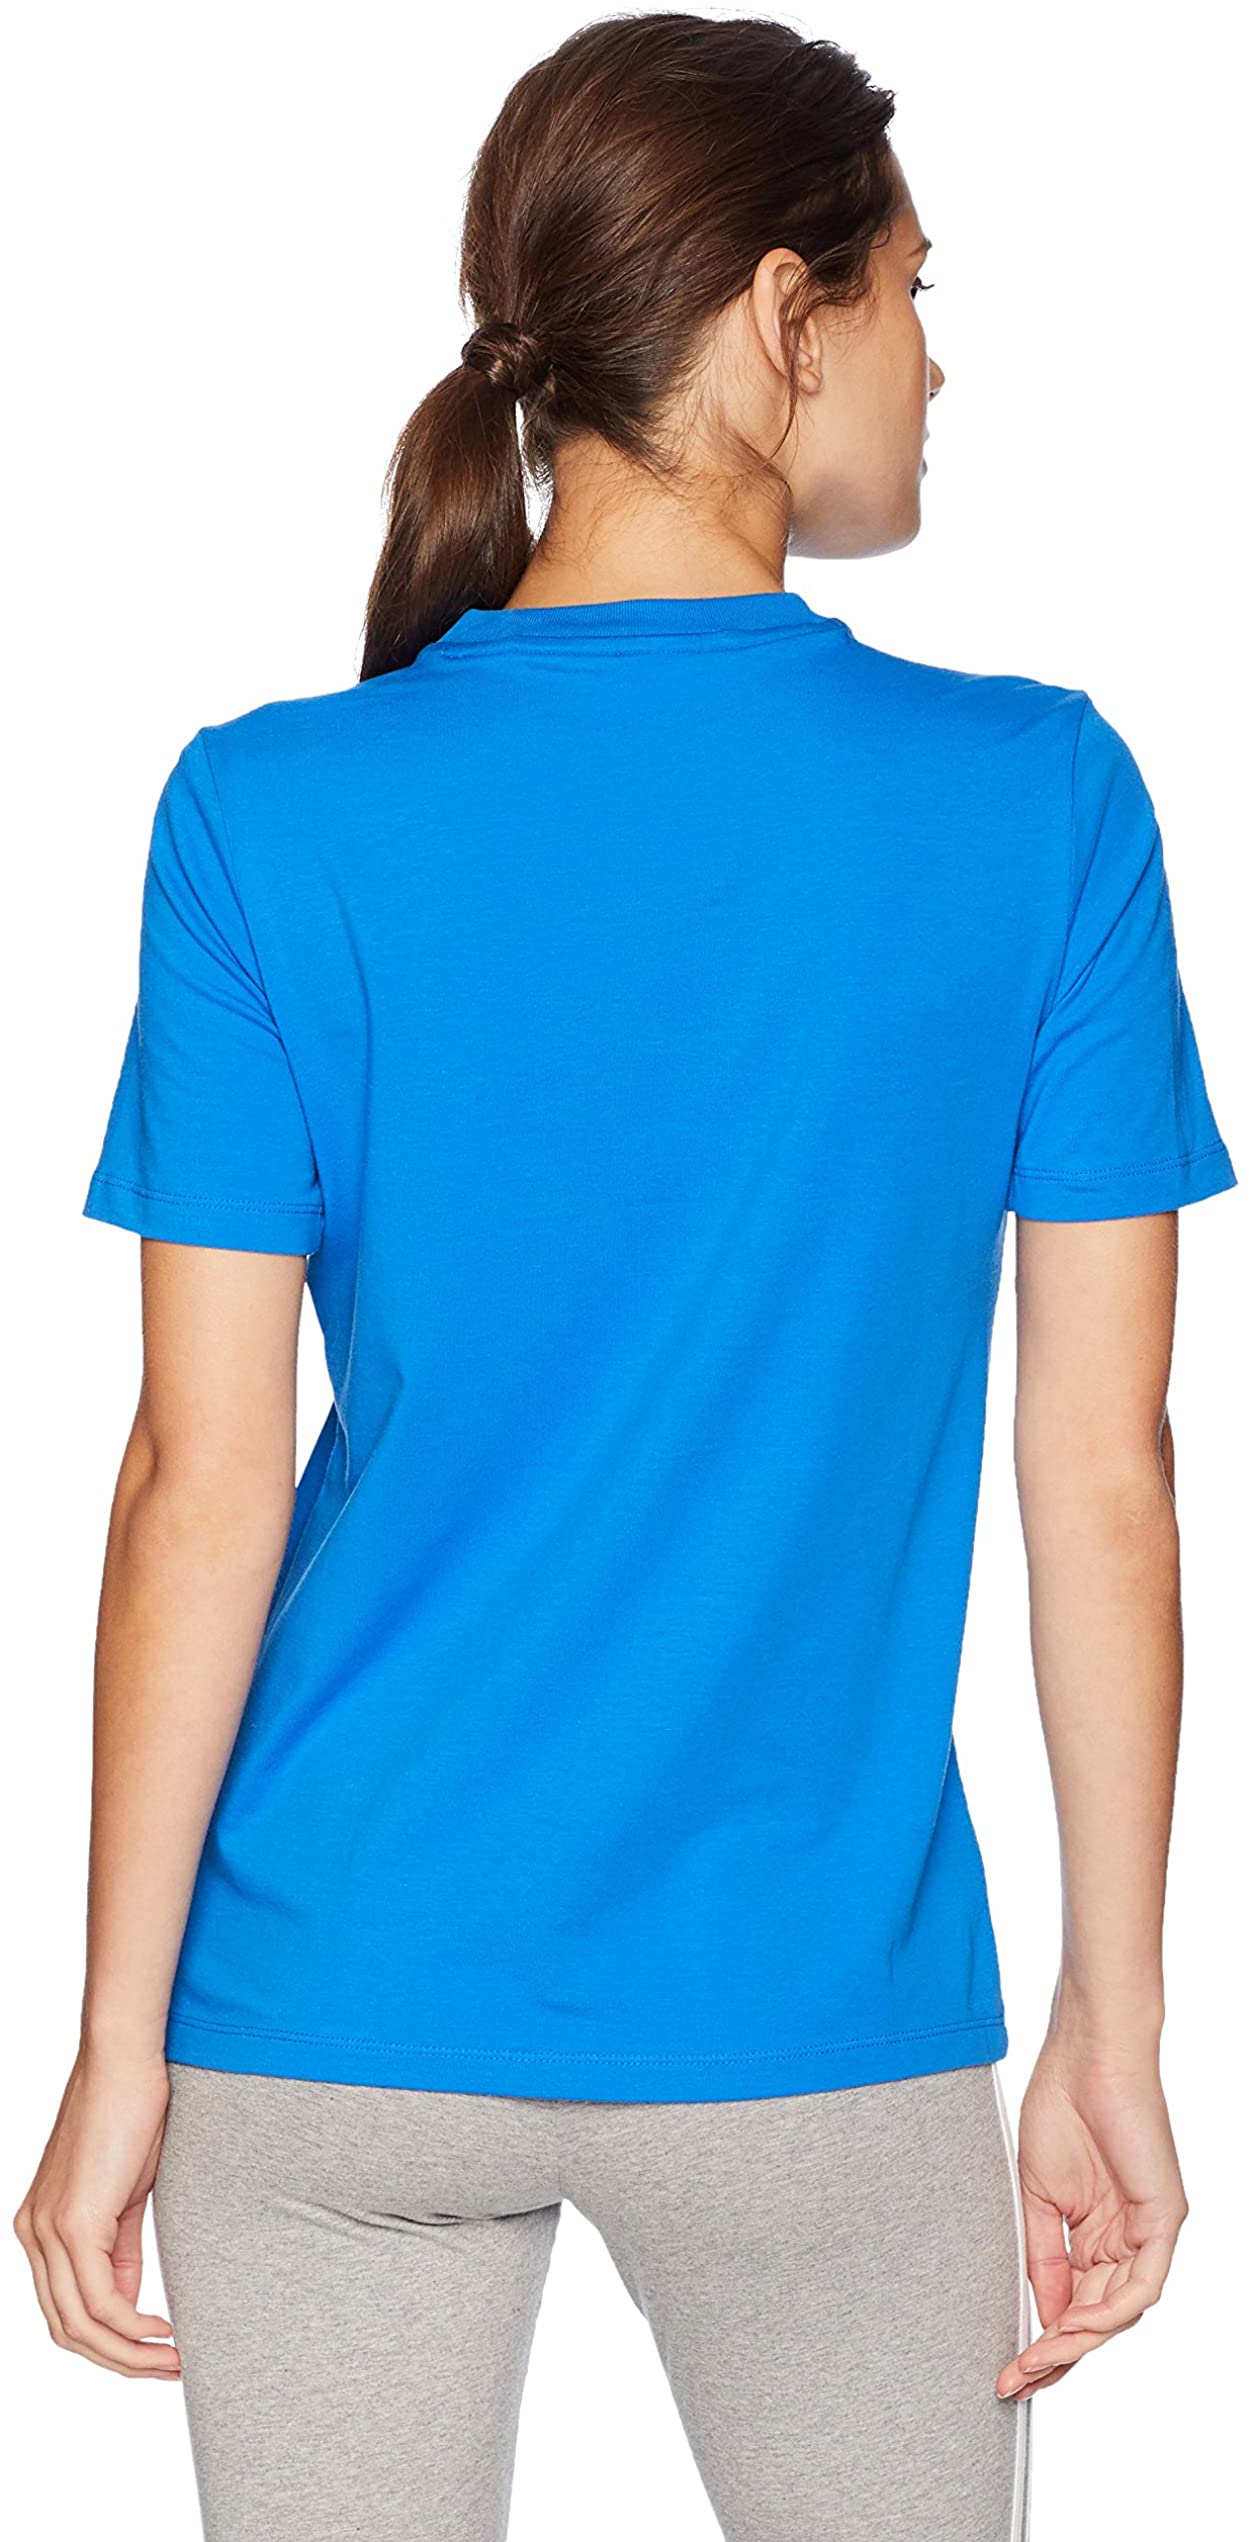 Adidas Womens Originals Adicolor Trefoil T-Shirt